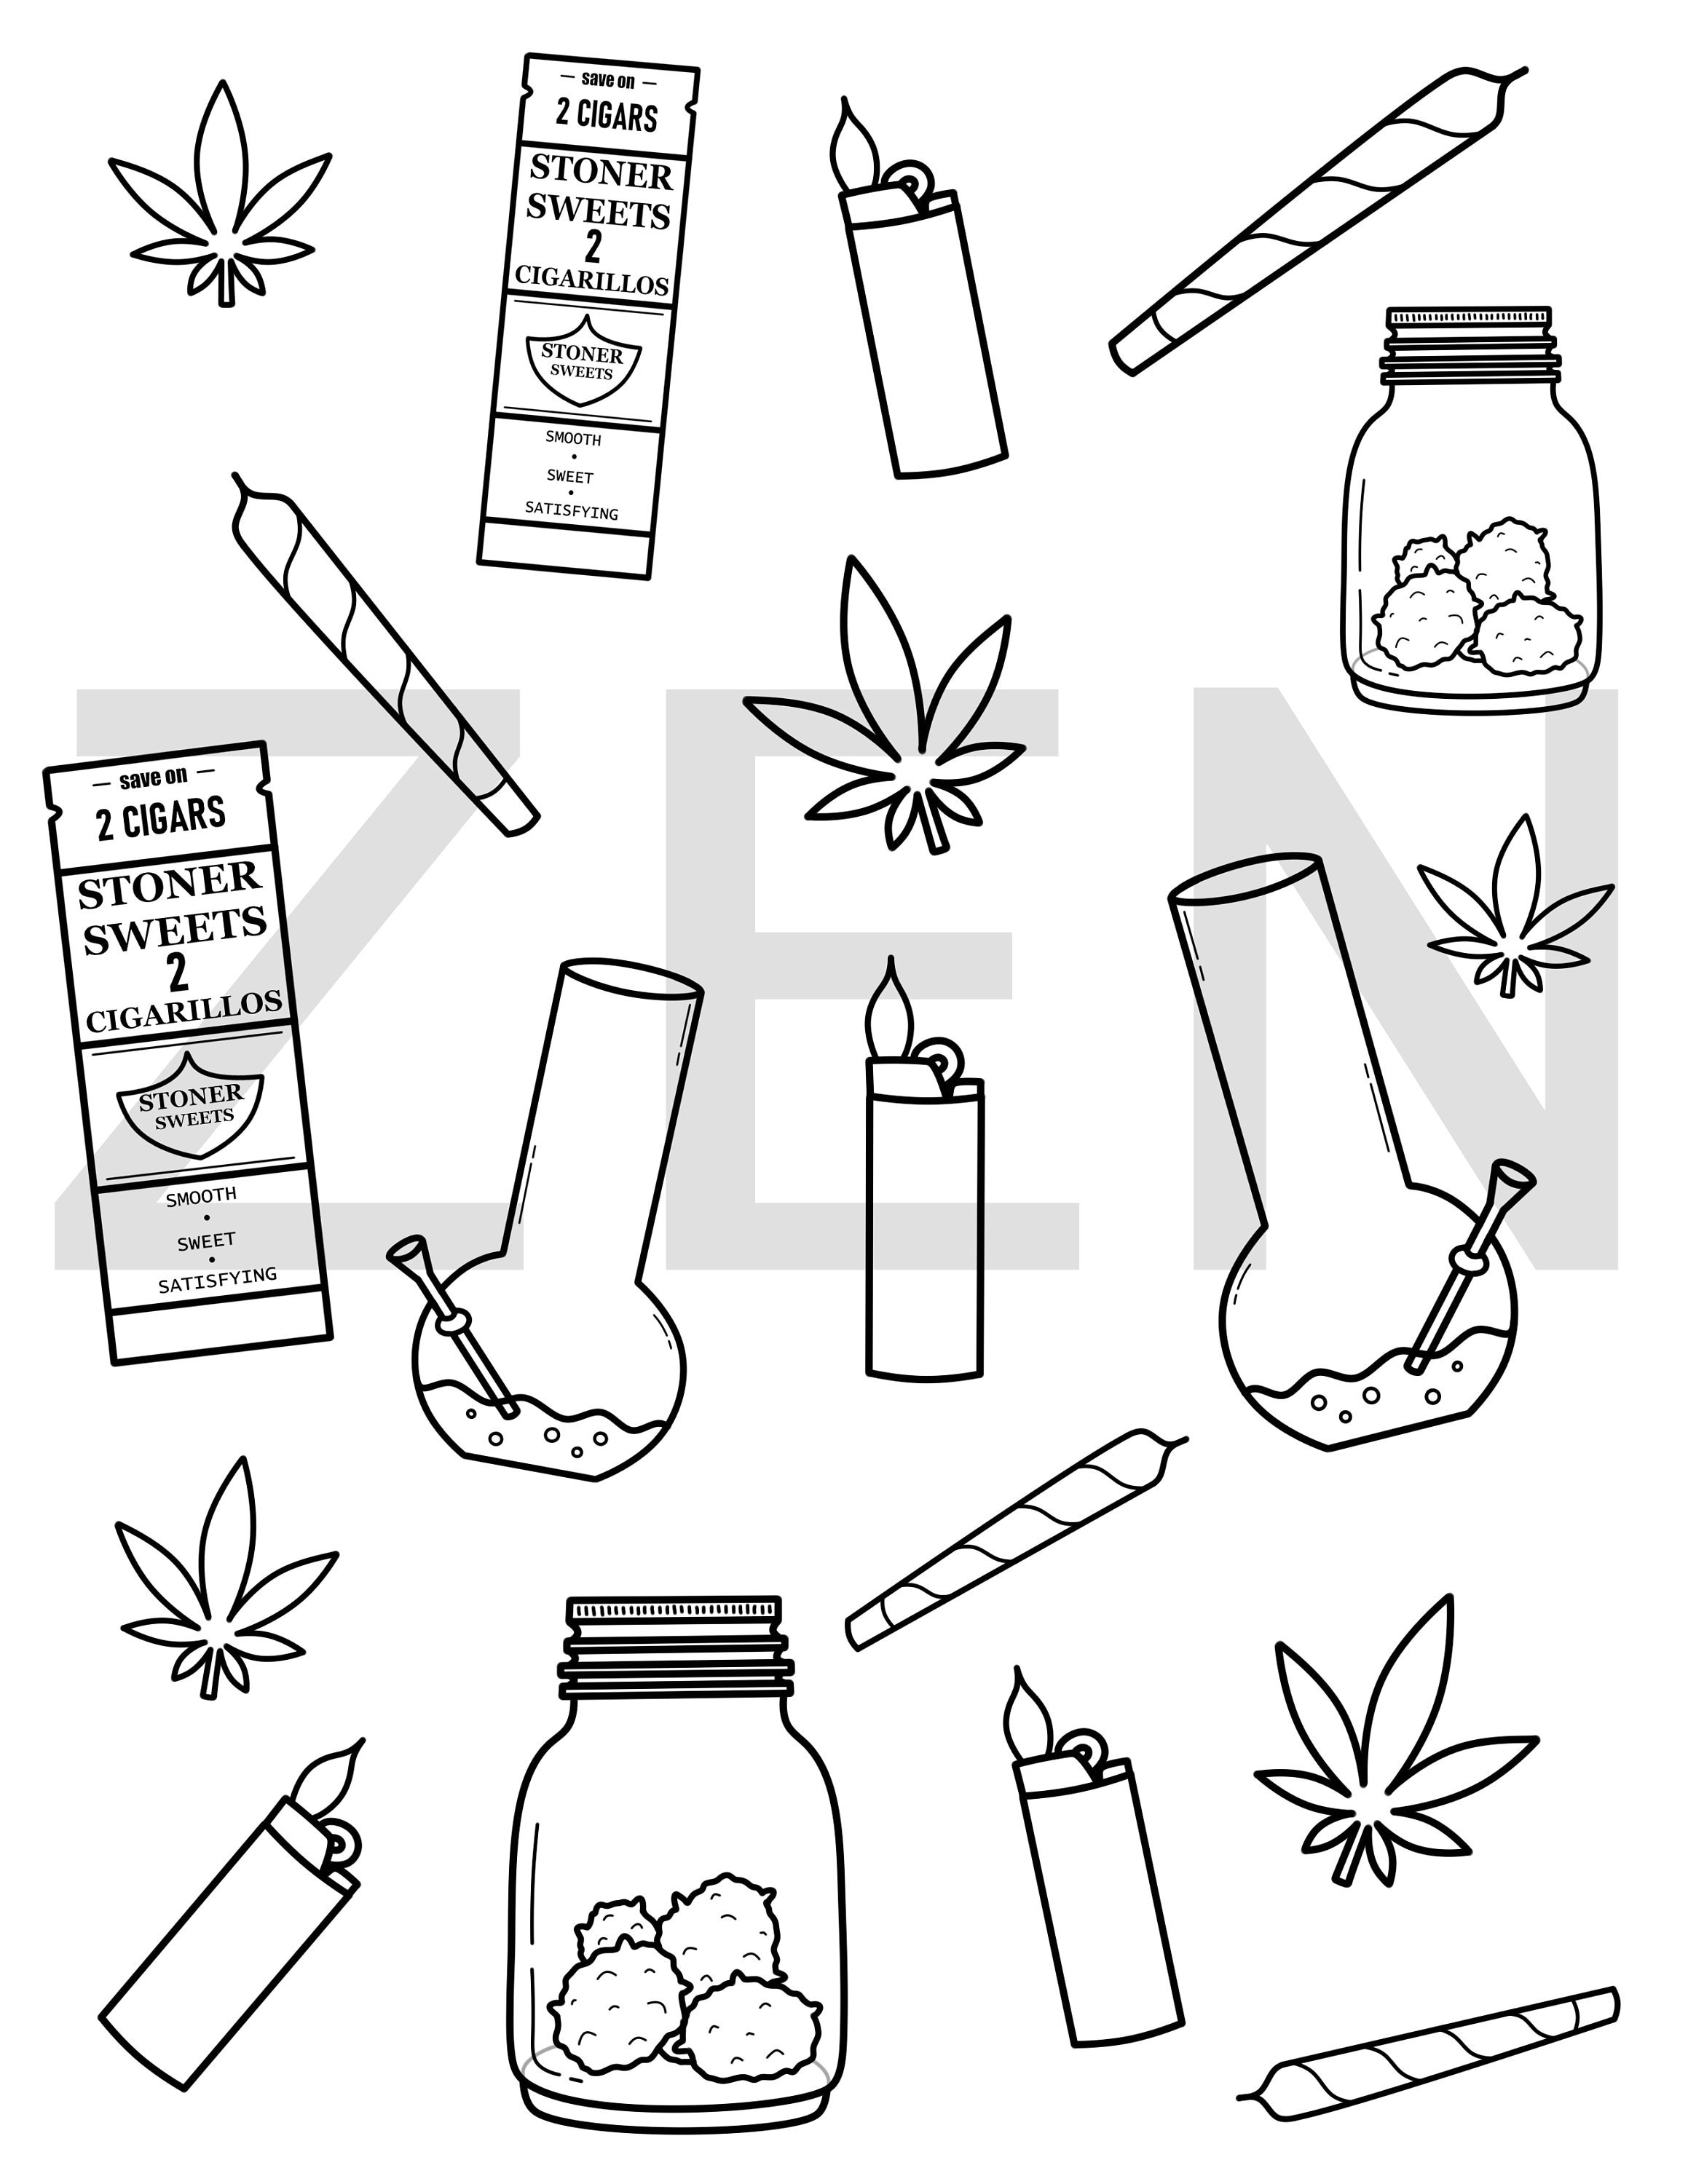 Marijuana pattern printable coloring page adult coloring page coloring pages for adults stoner coloring page weed coloring sheet